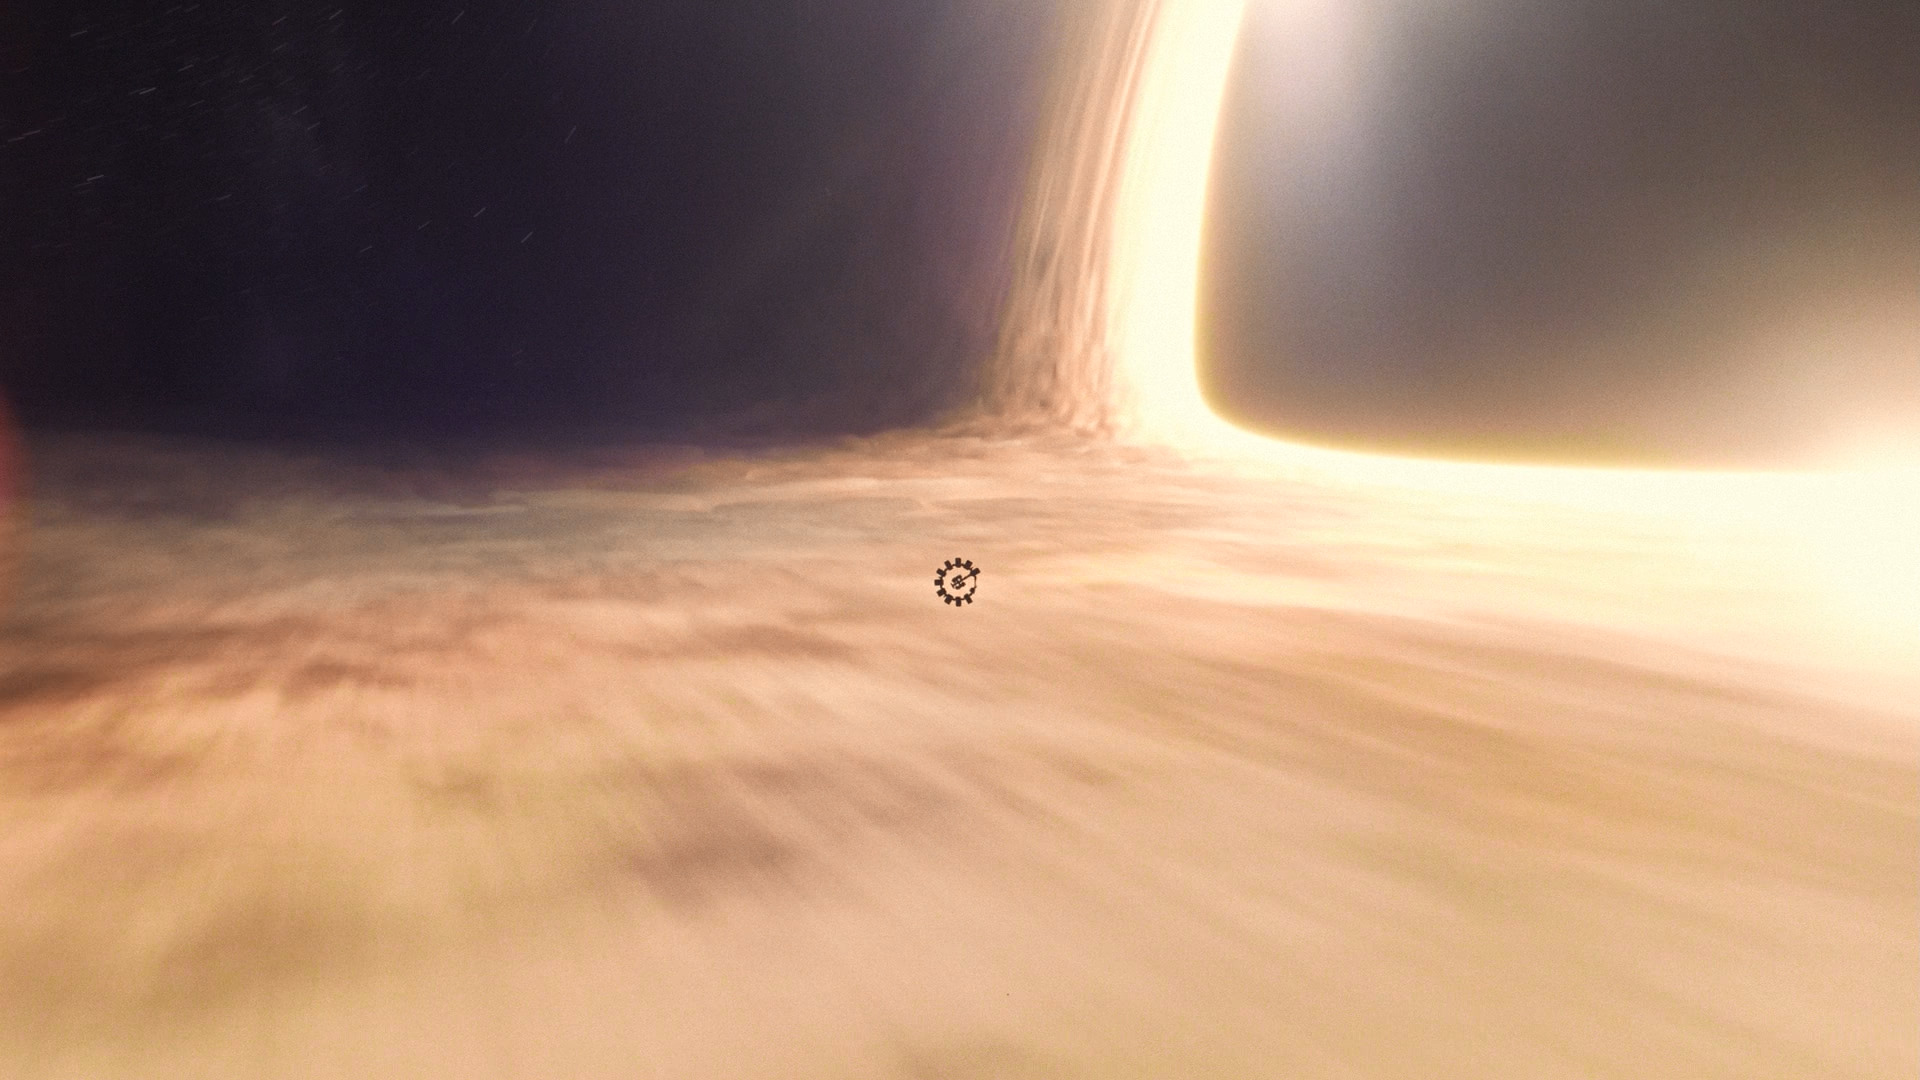 Interstellar (movie), Gargantua, Black Holes Wallpapers HD / Desktop and Mobile Backgrounds